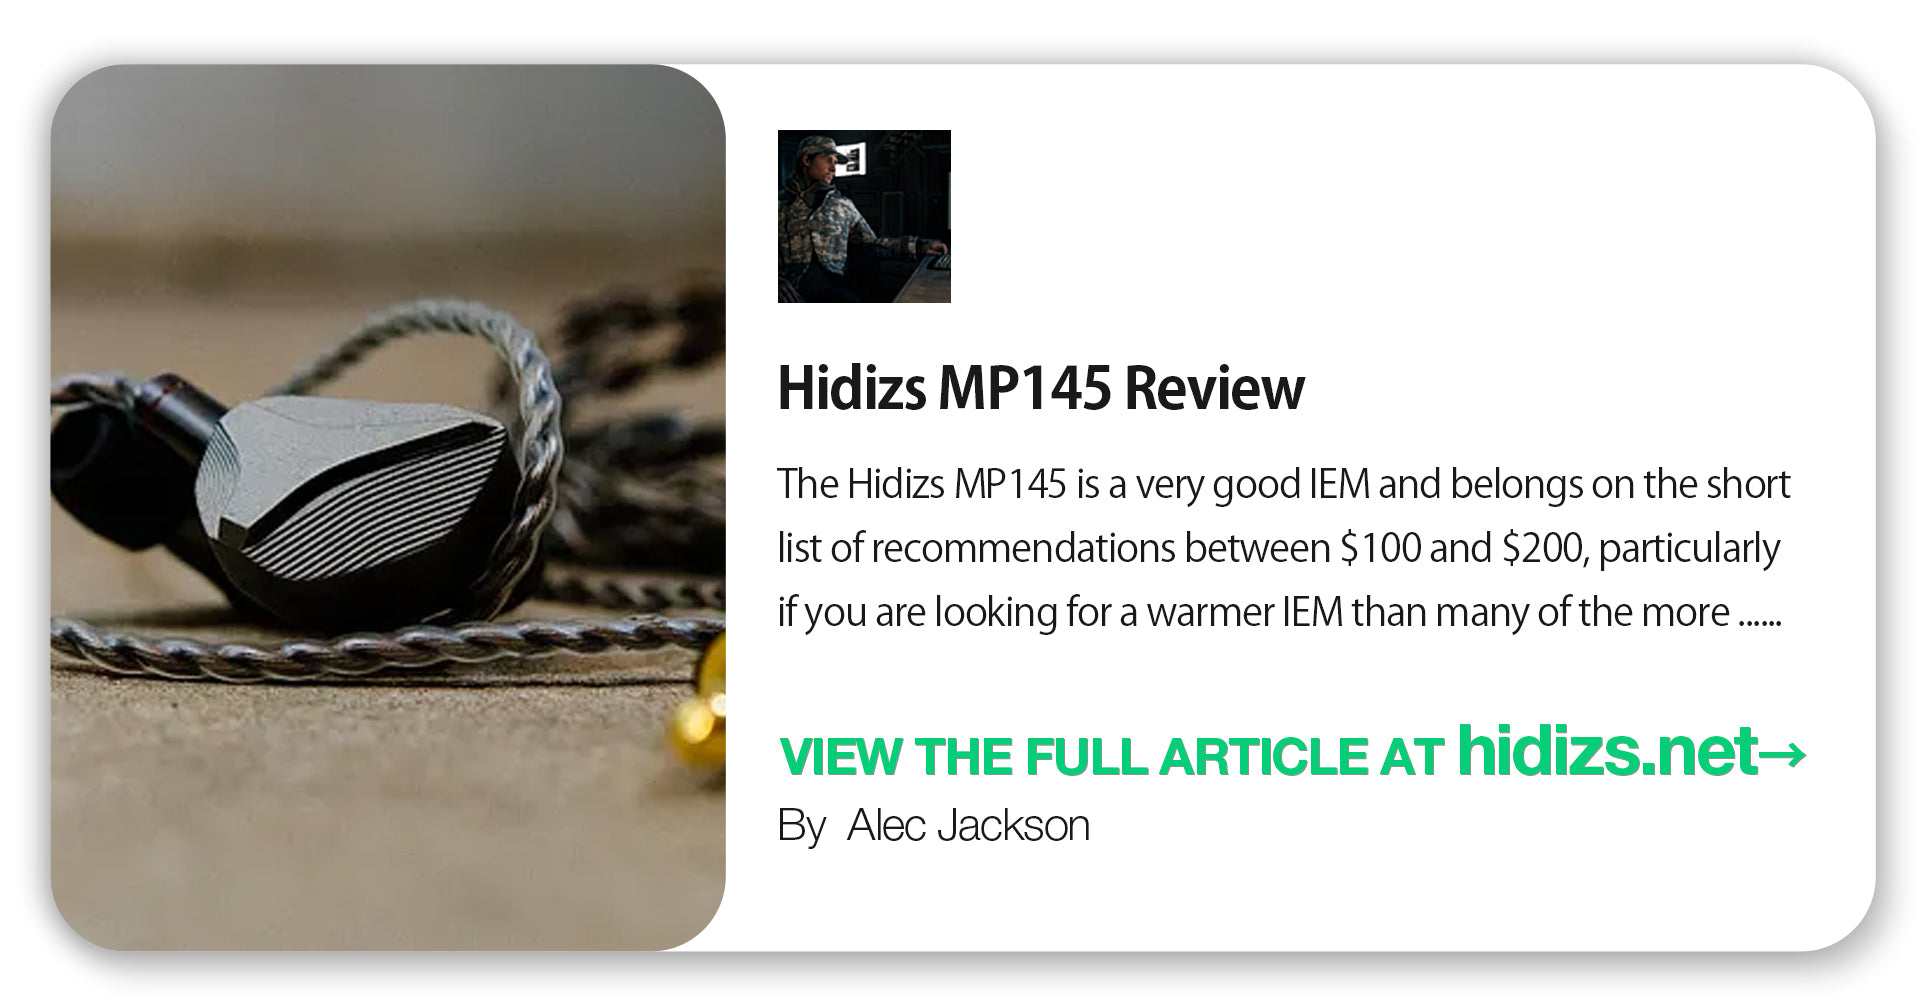 Hidizs MP145 Review - Alec